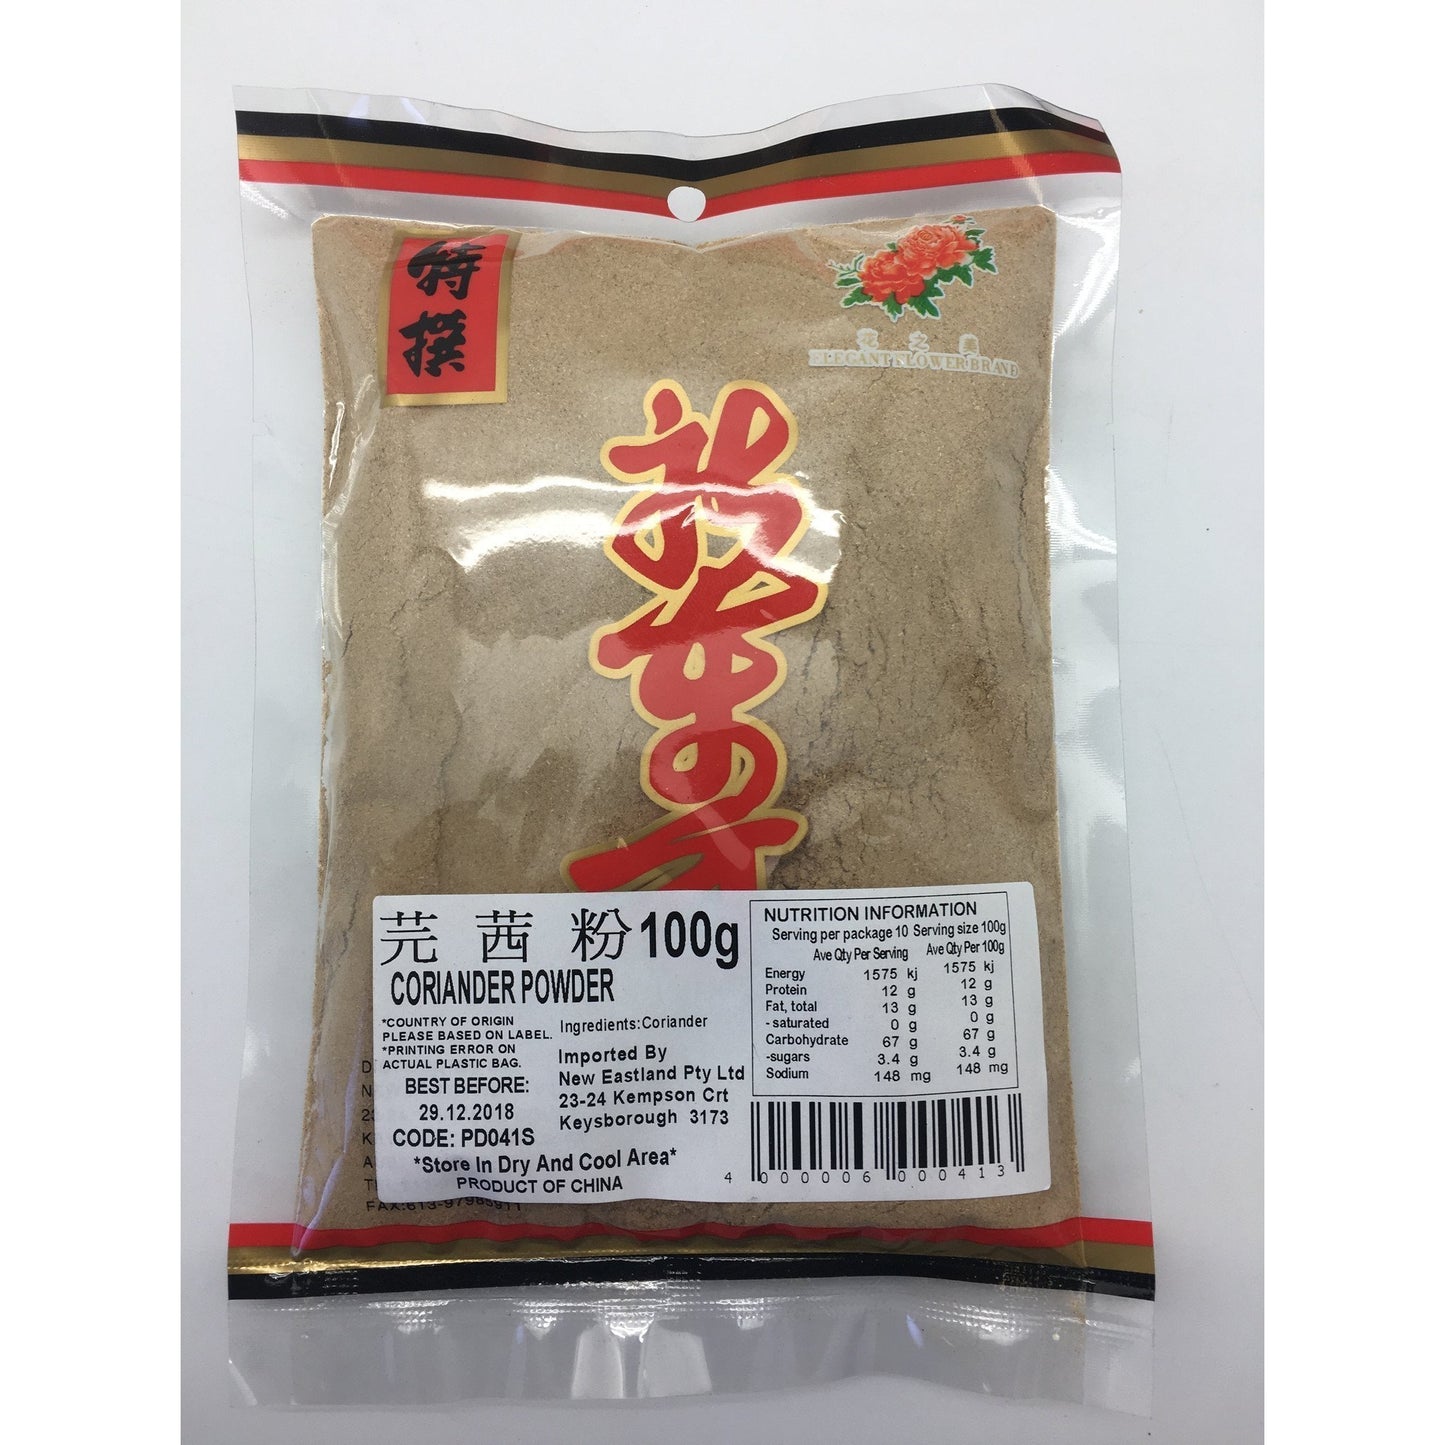 PD041S New Eastland Pty Ltd - Coriander Powder 100g - 10 packets / 1 Bag - New Eastland Pty Ltd - Asian food wholesalers